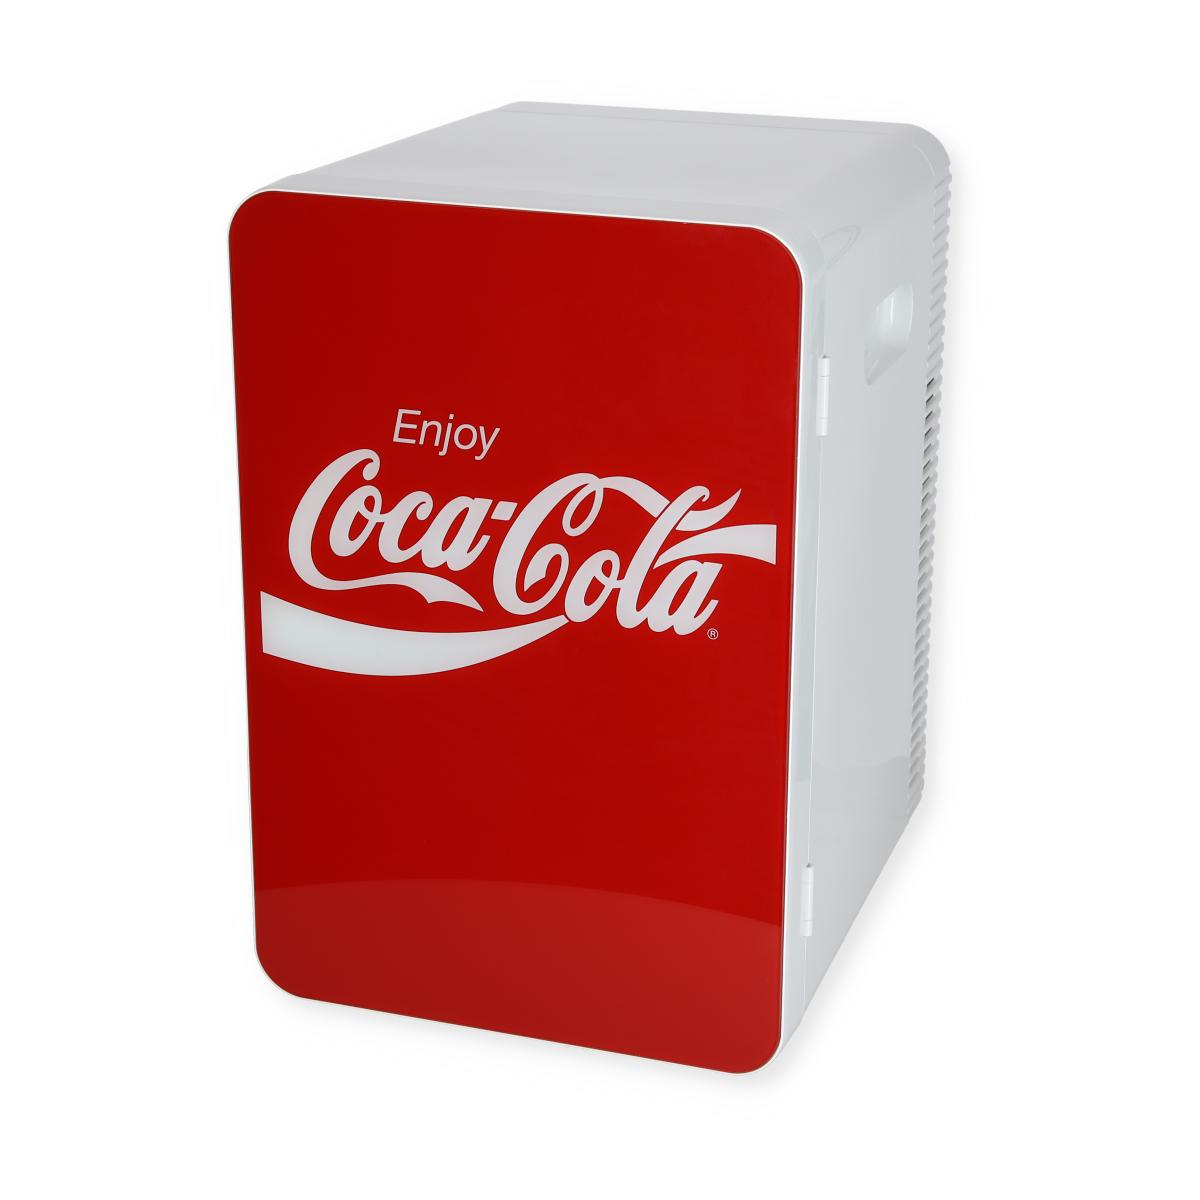 Coca Cola Minikühlschrank kaufen